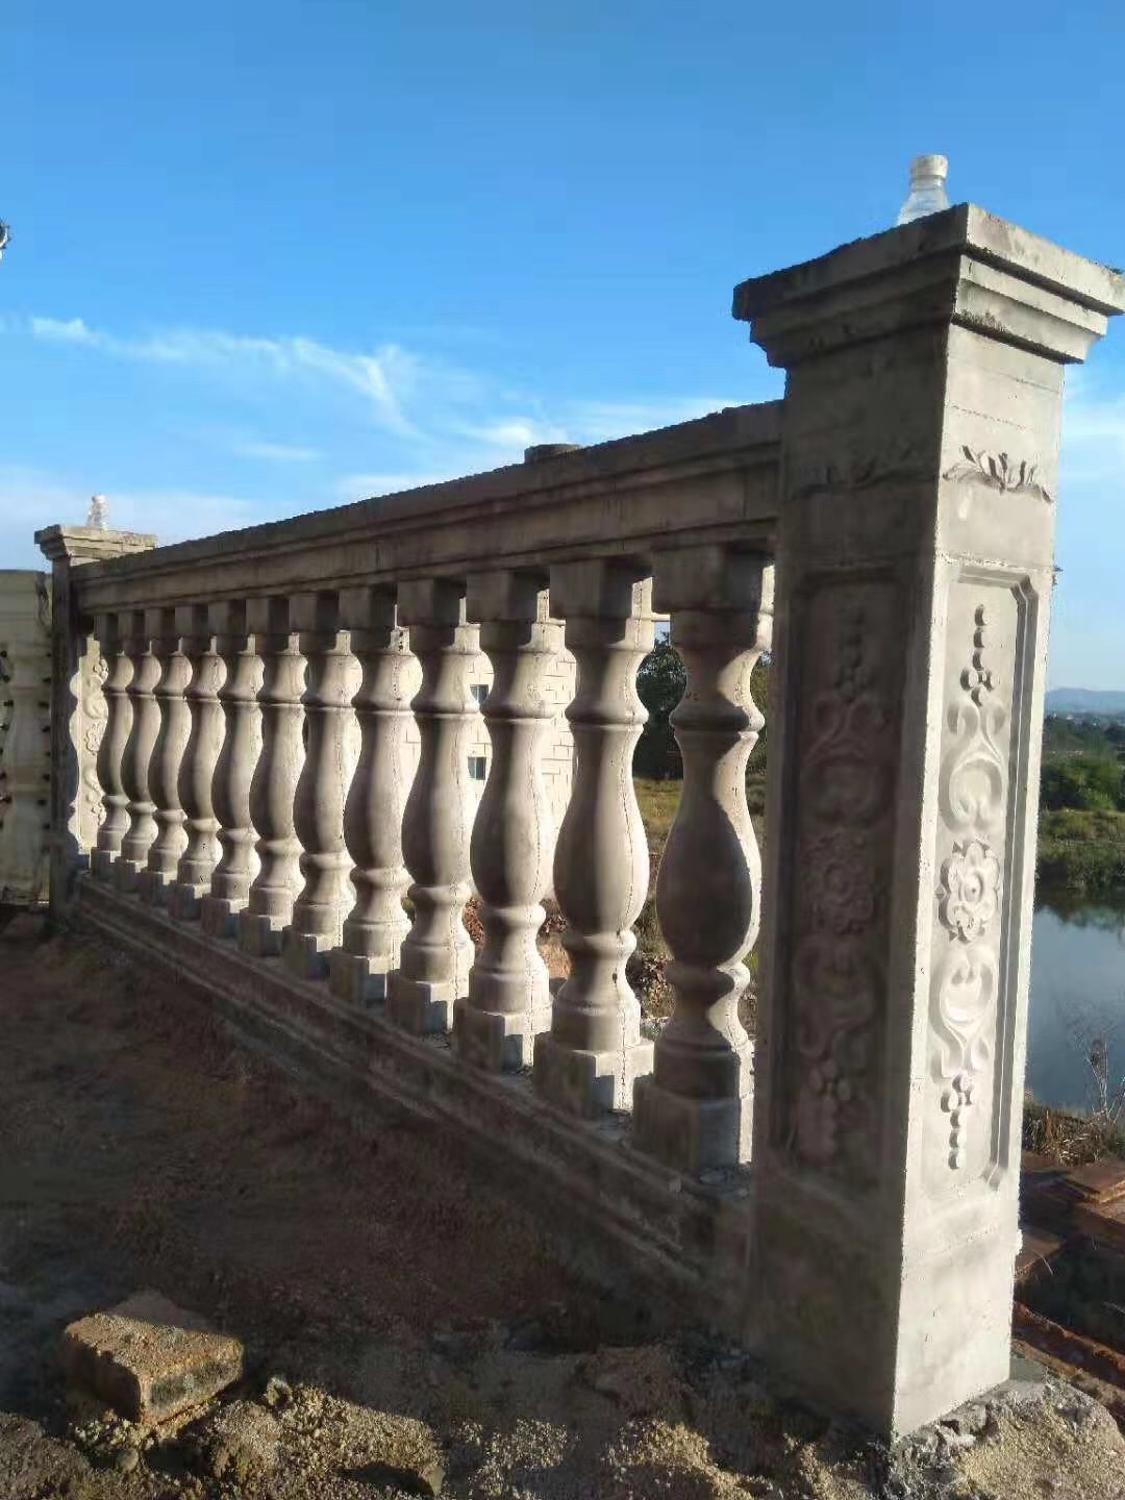 ABS plastic moulds baluster side column mold F46 home villa garden concrete molds for sale